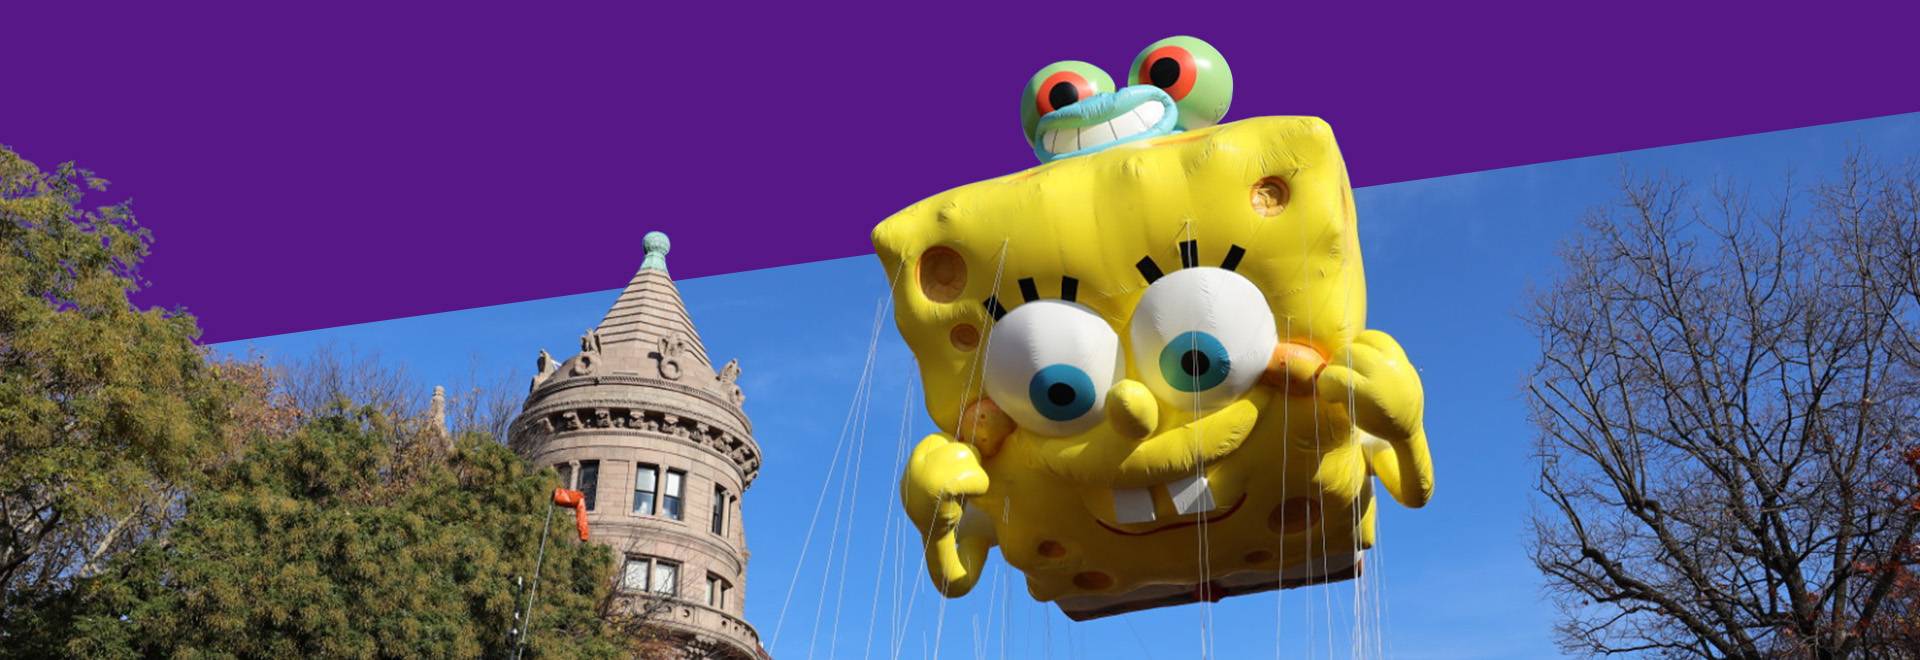 SpongeBob SquarePants Macy's Thanksgiving Day Parade Balloon Float